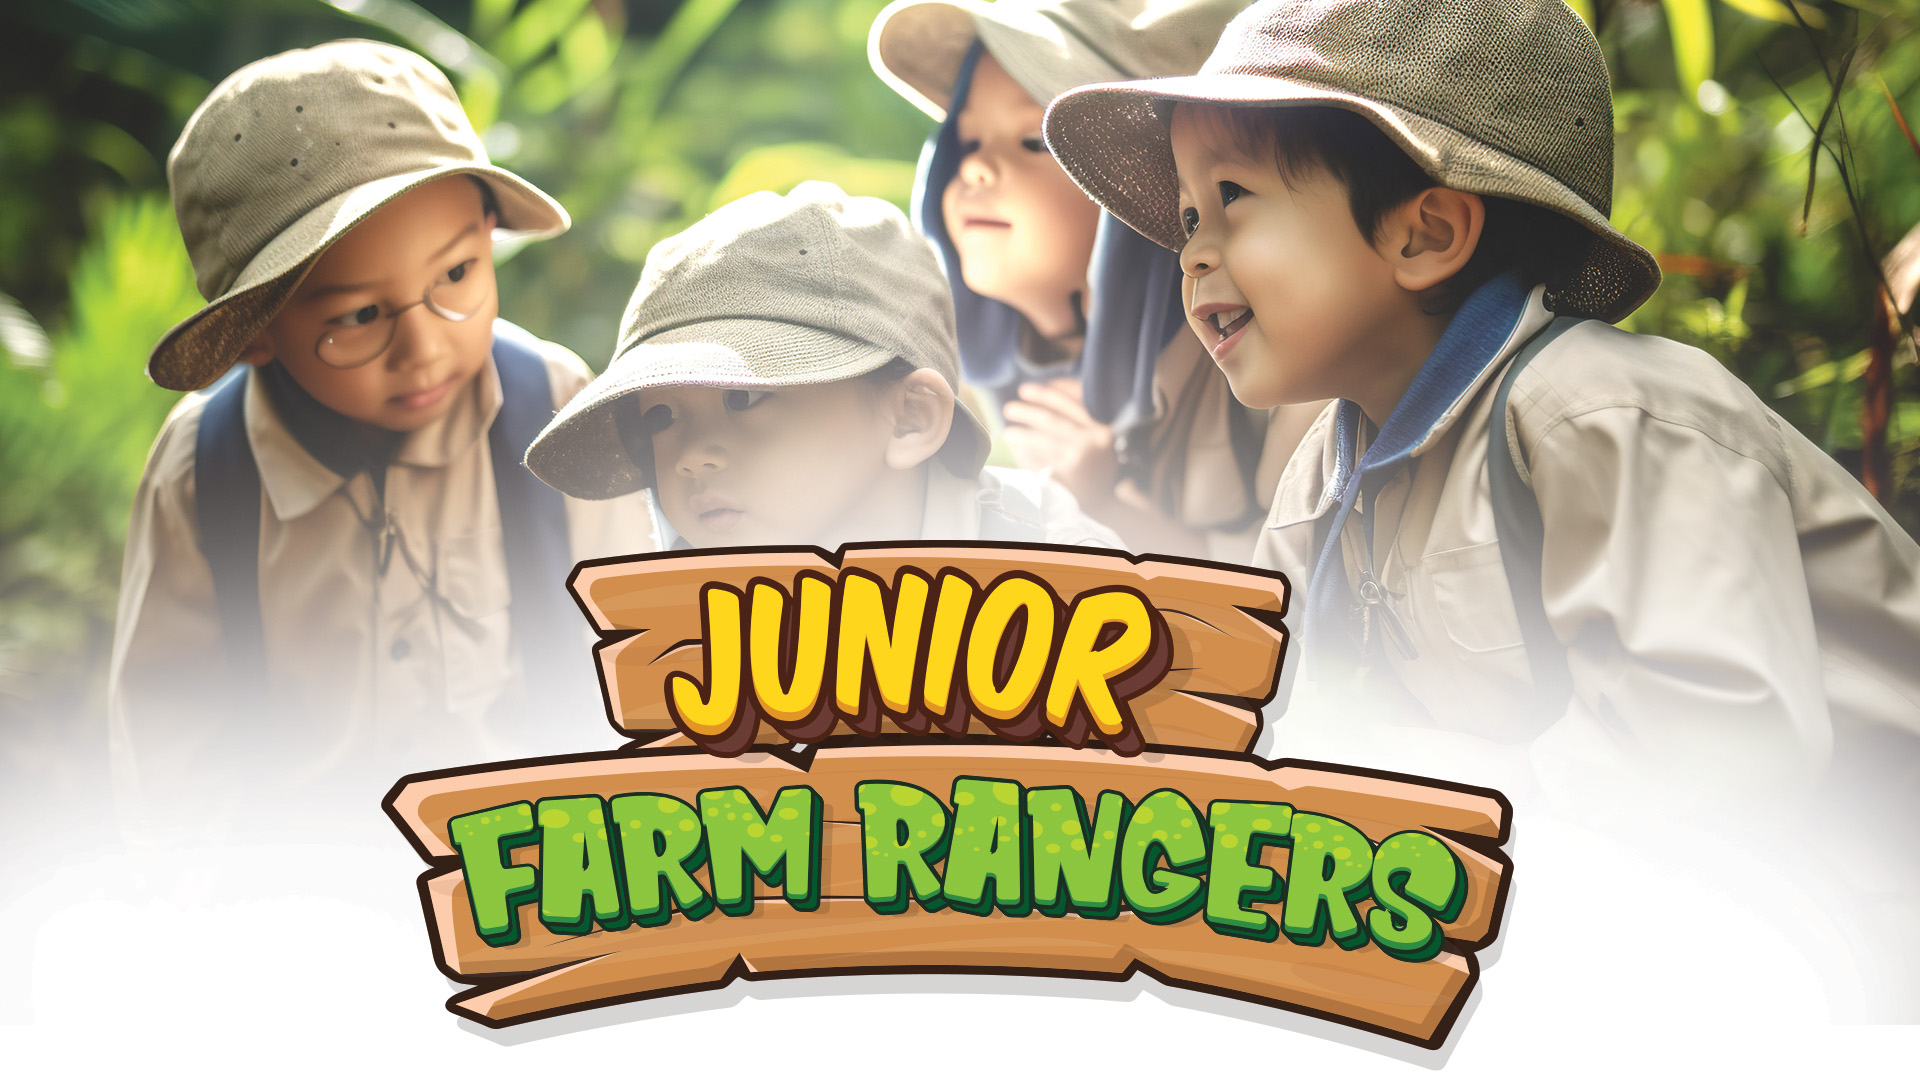 Junior Farm Rangers